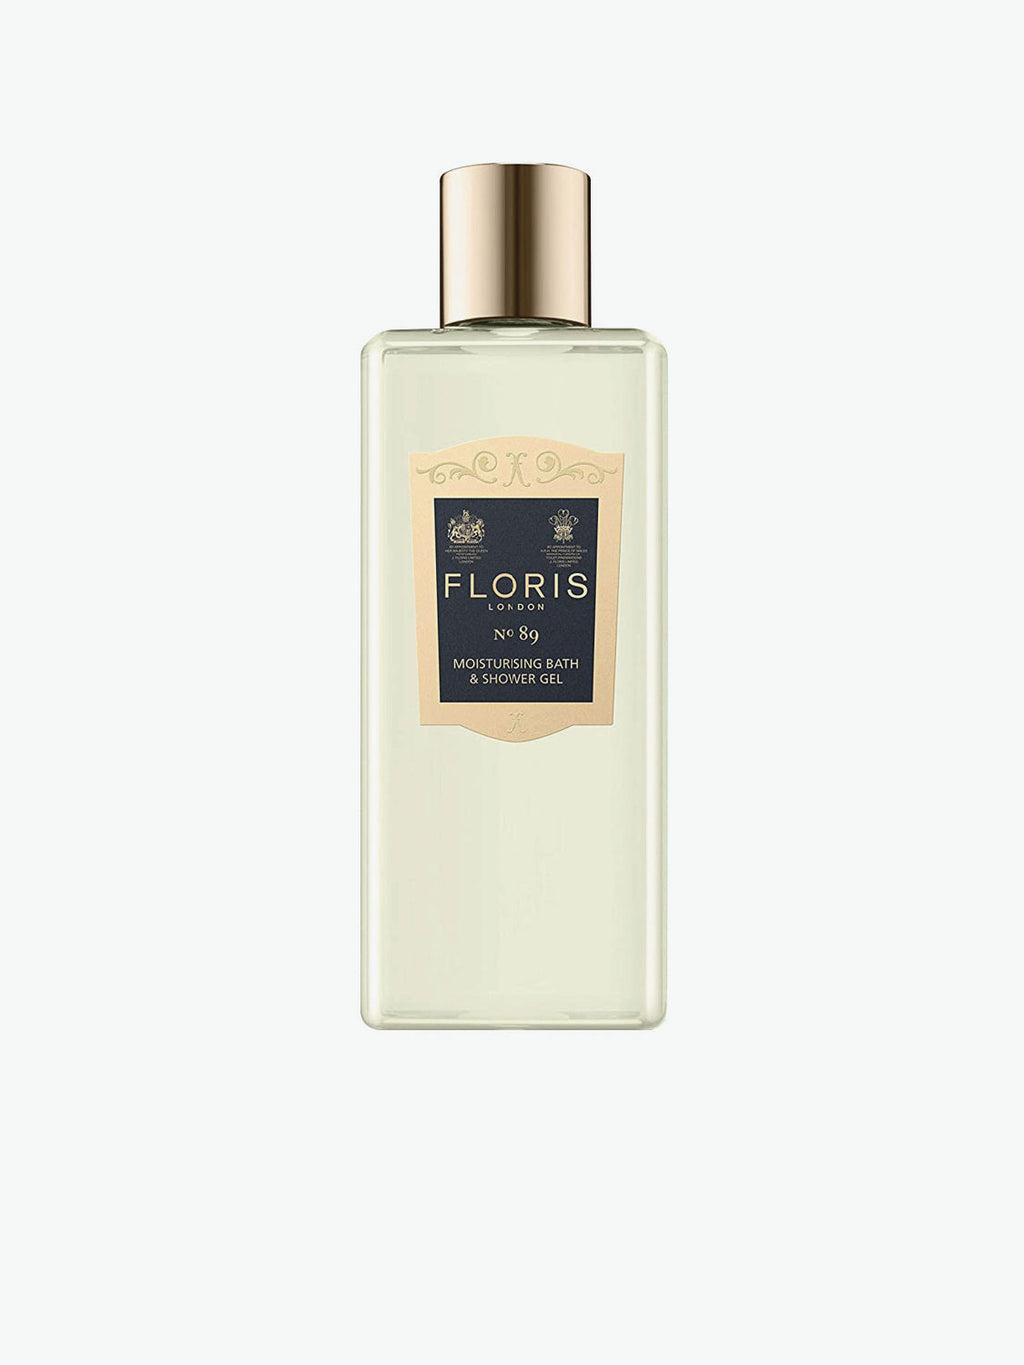 Floris London No. 89 Moisturising Bath And Shower Gel |  A